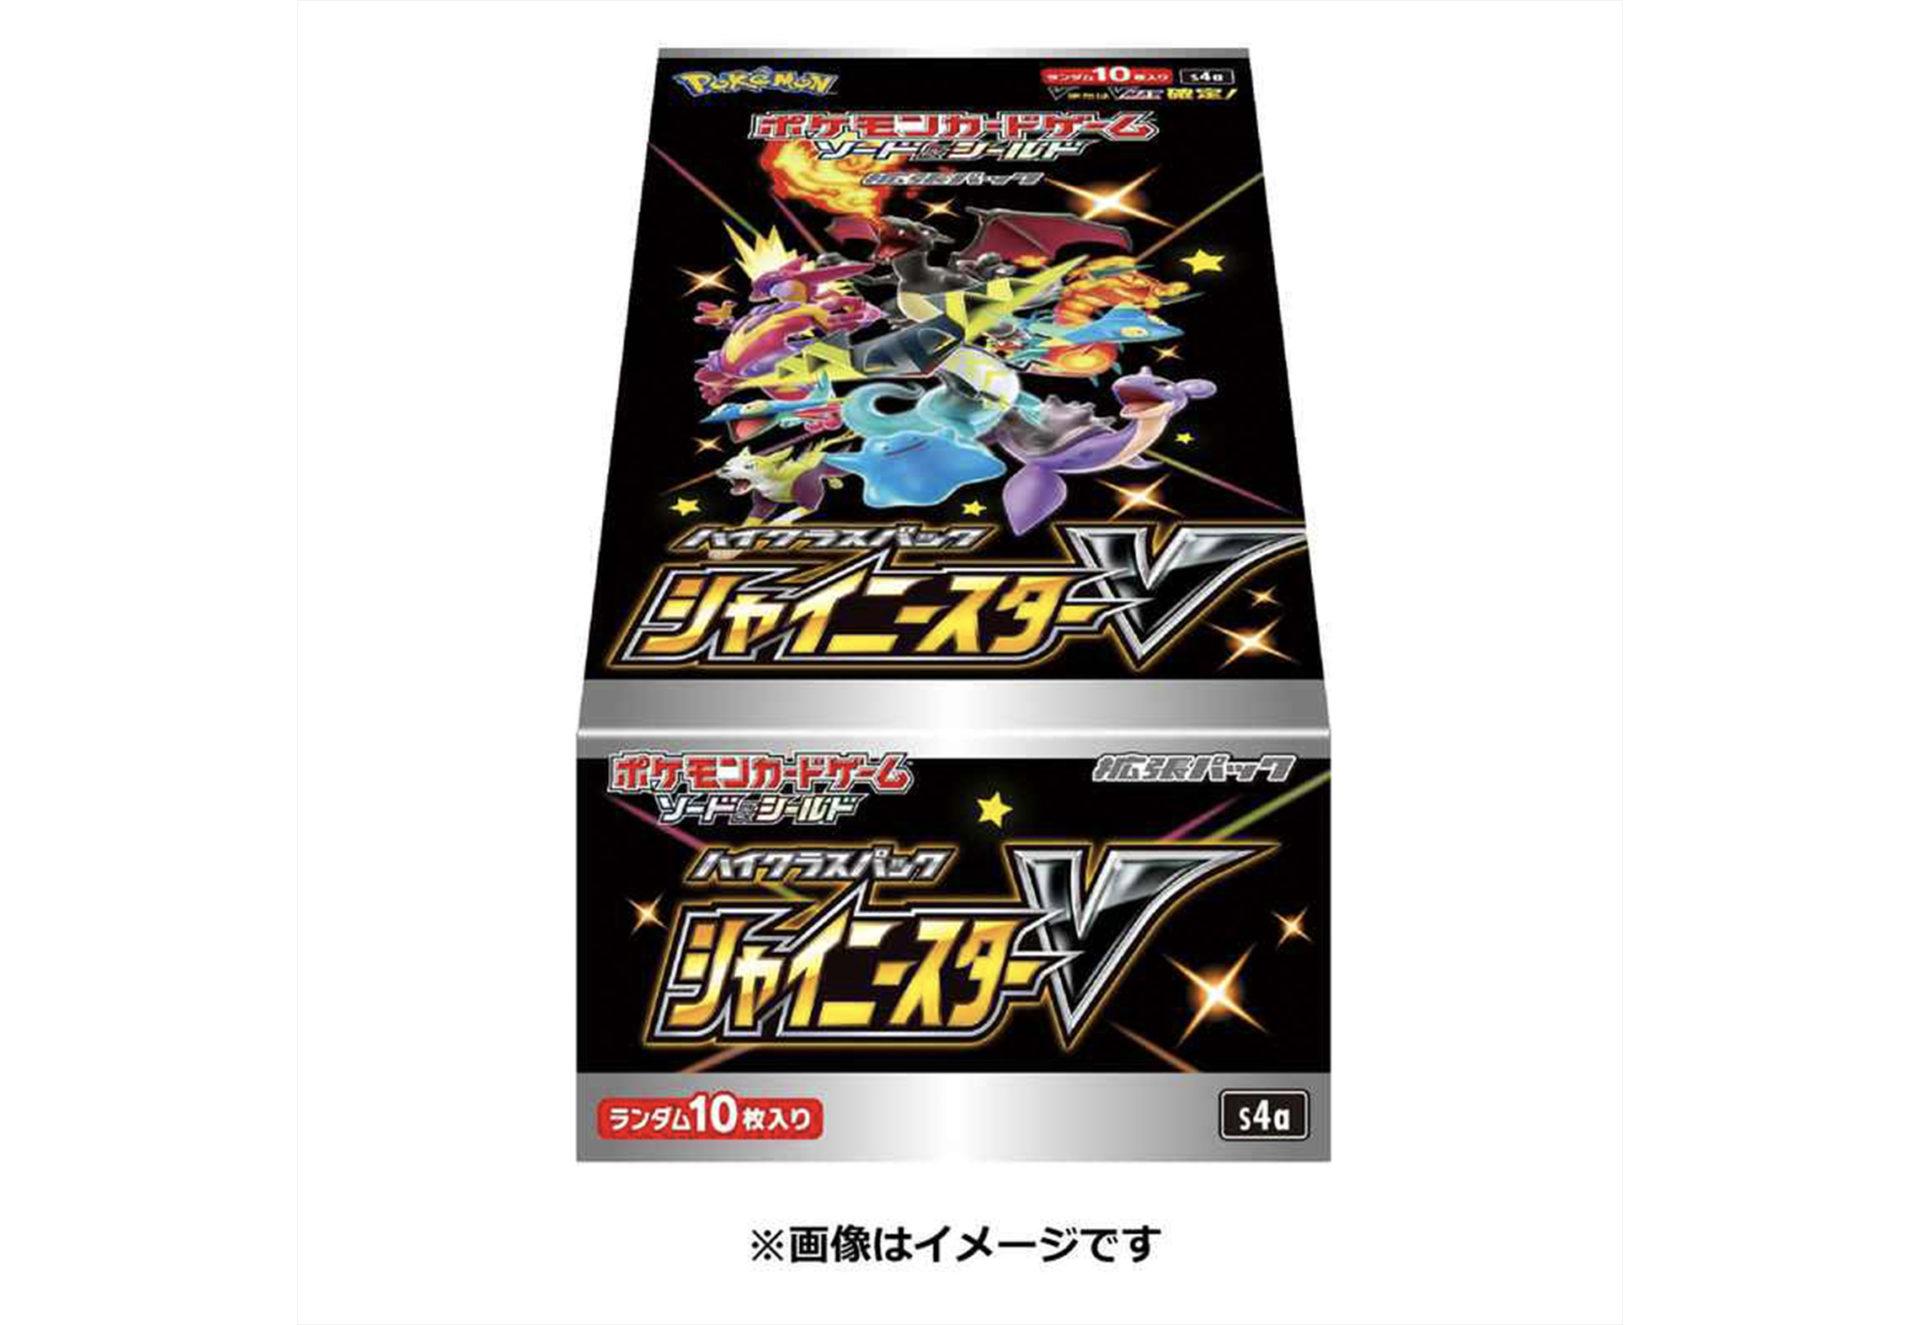 Pokemon TCG expansion Shiny Star V booster box.